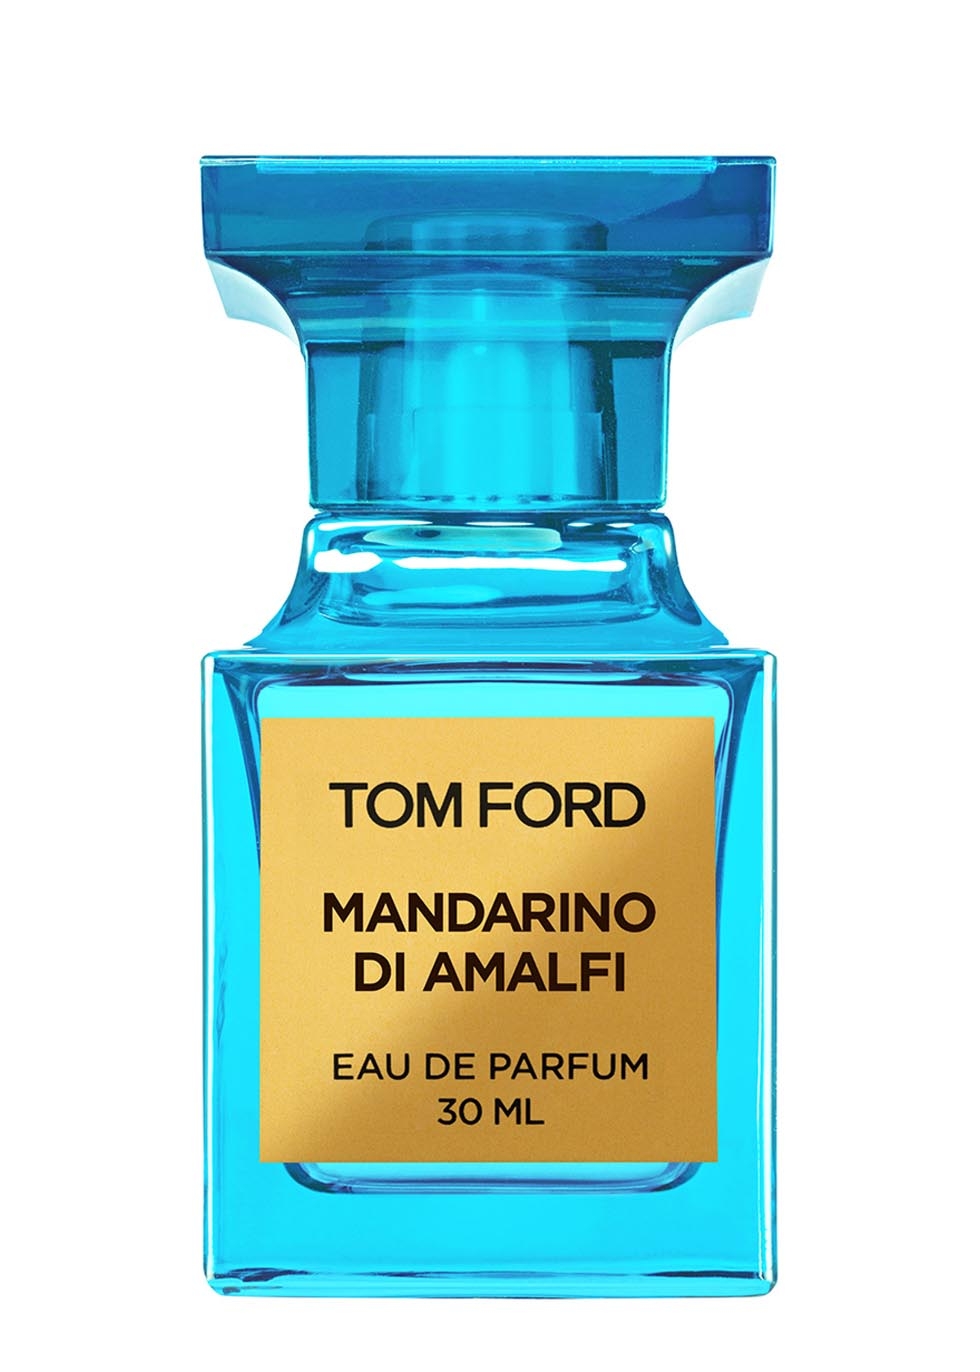 Tom Ford Mandarino di Amalfi Eau de Parfum 30ml